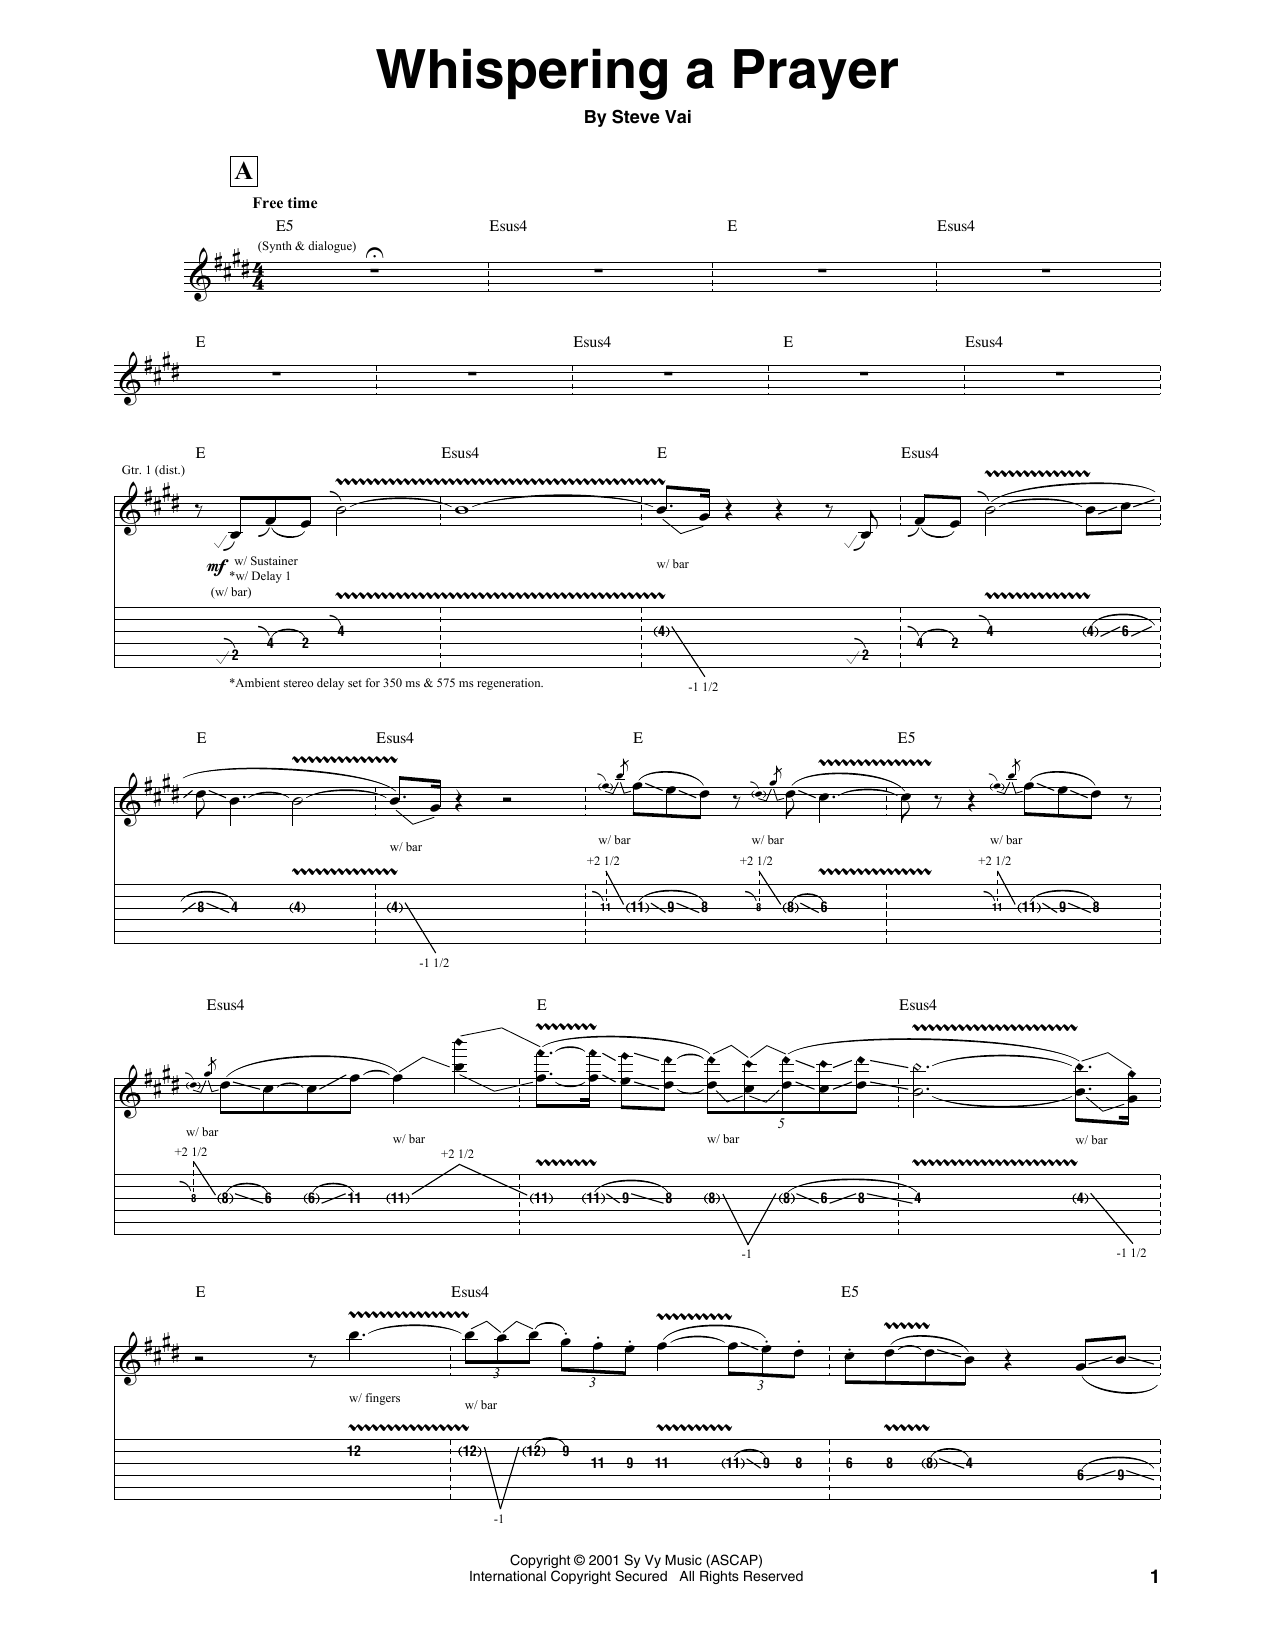 Steve Vai Whispering A Prayer Sheet Music Notes & Chords for Guitar Tab - Download or Print PDF